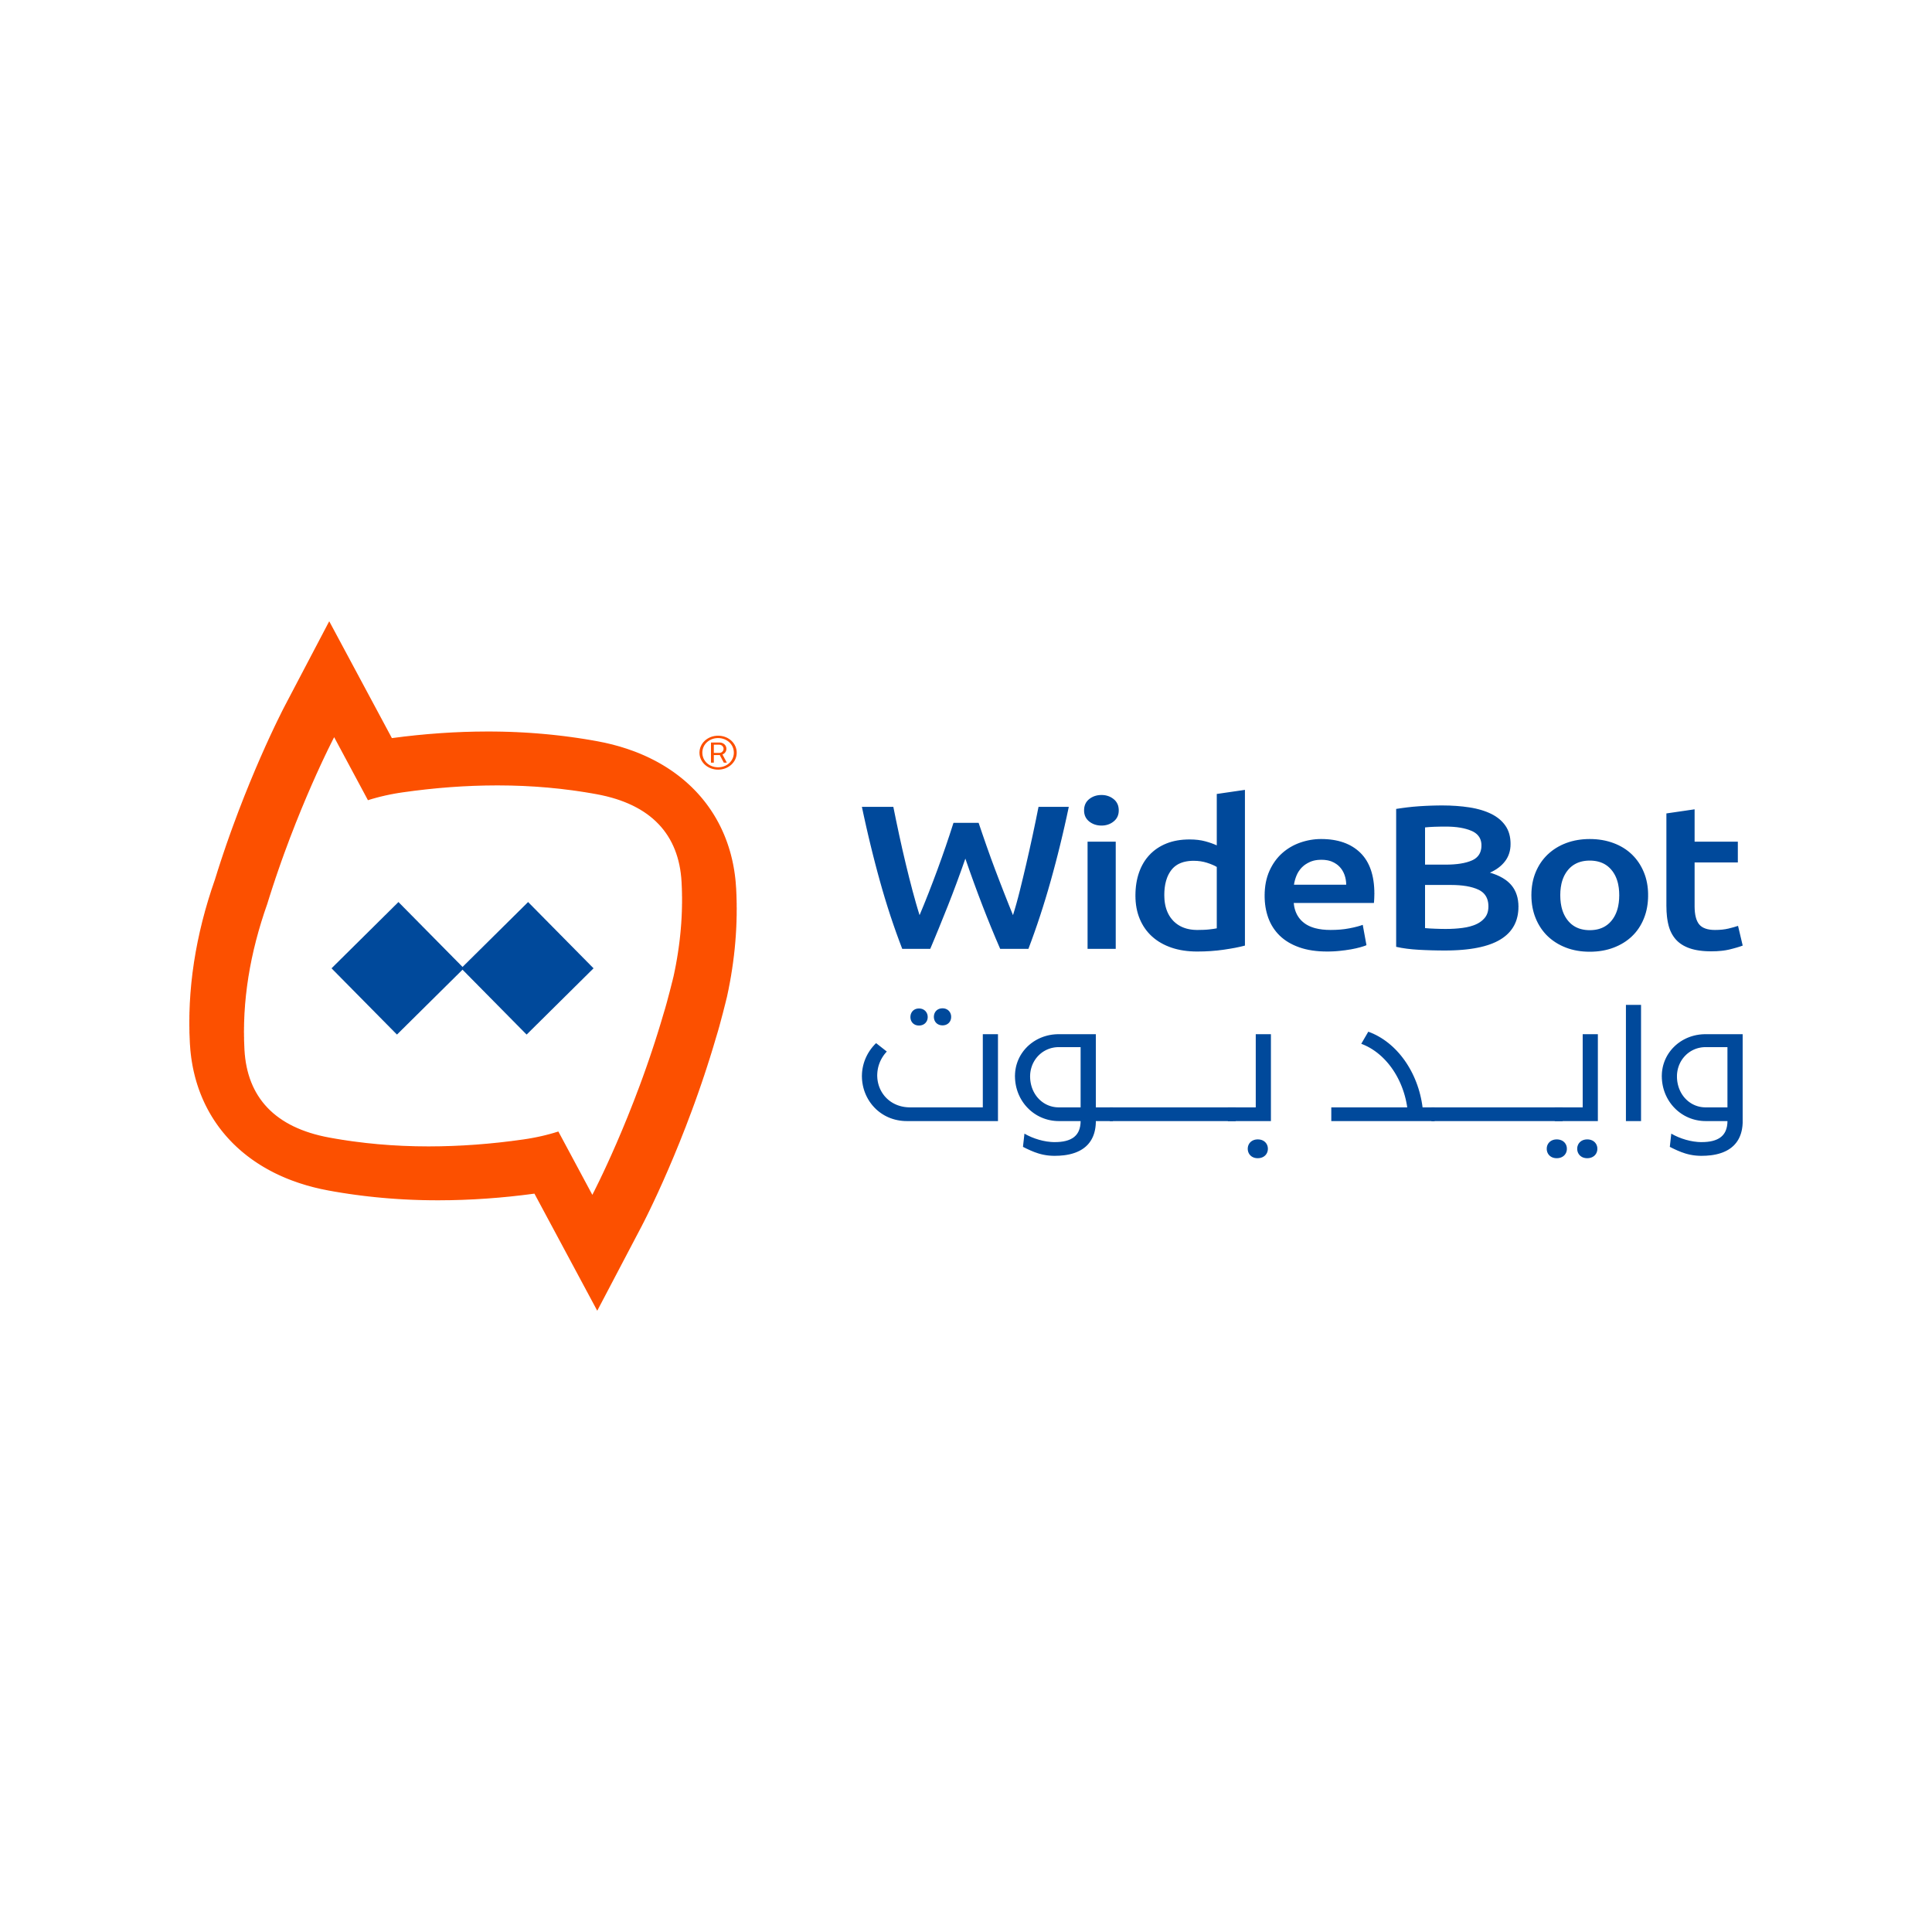 WideBot